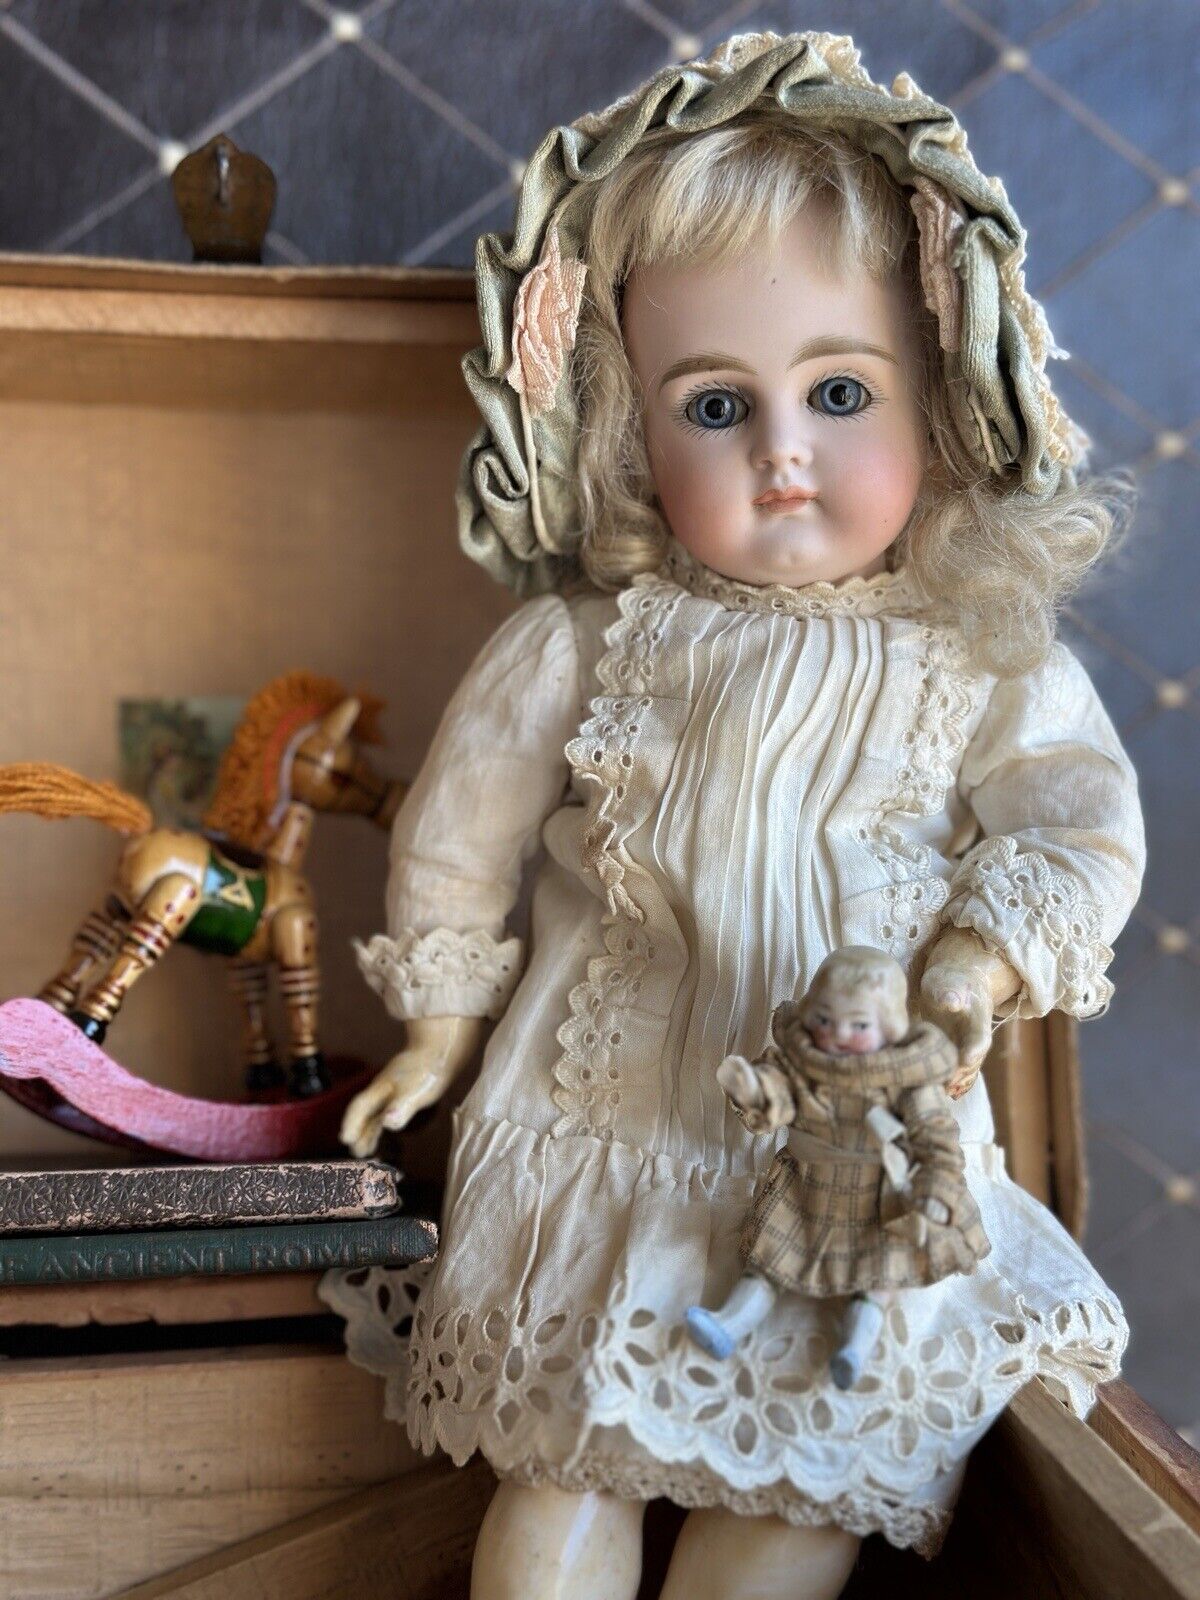 Shop for Antique Dolls